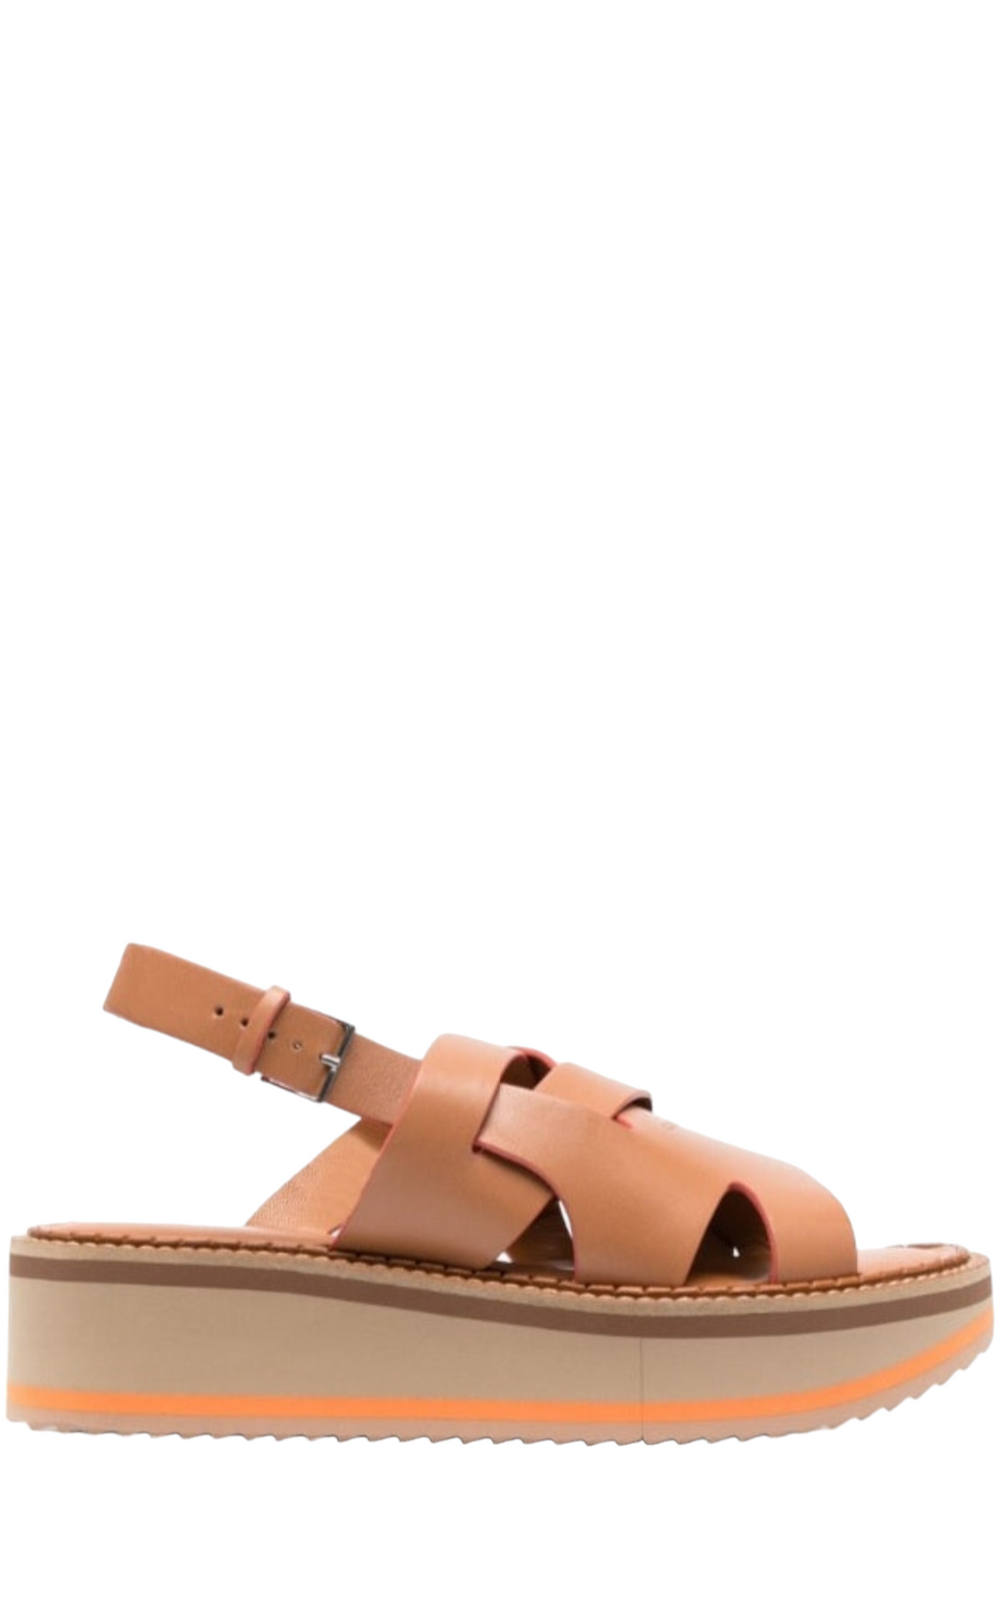 Franka Tan Leather Sandals - Clergerie - Liberty Shoes Australia